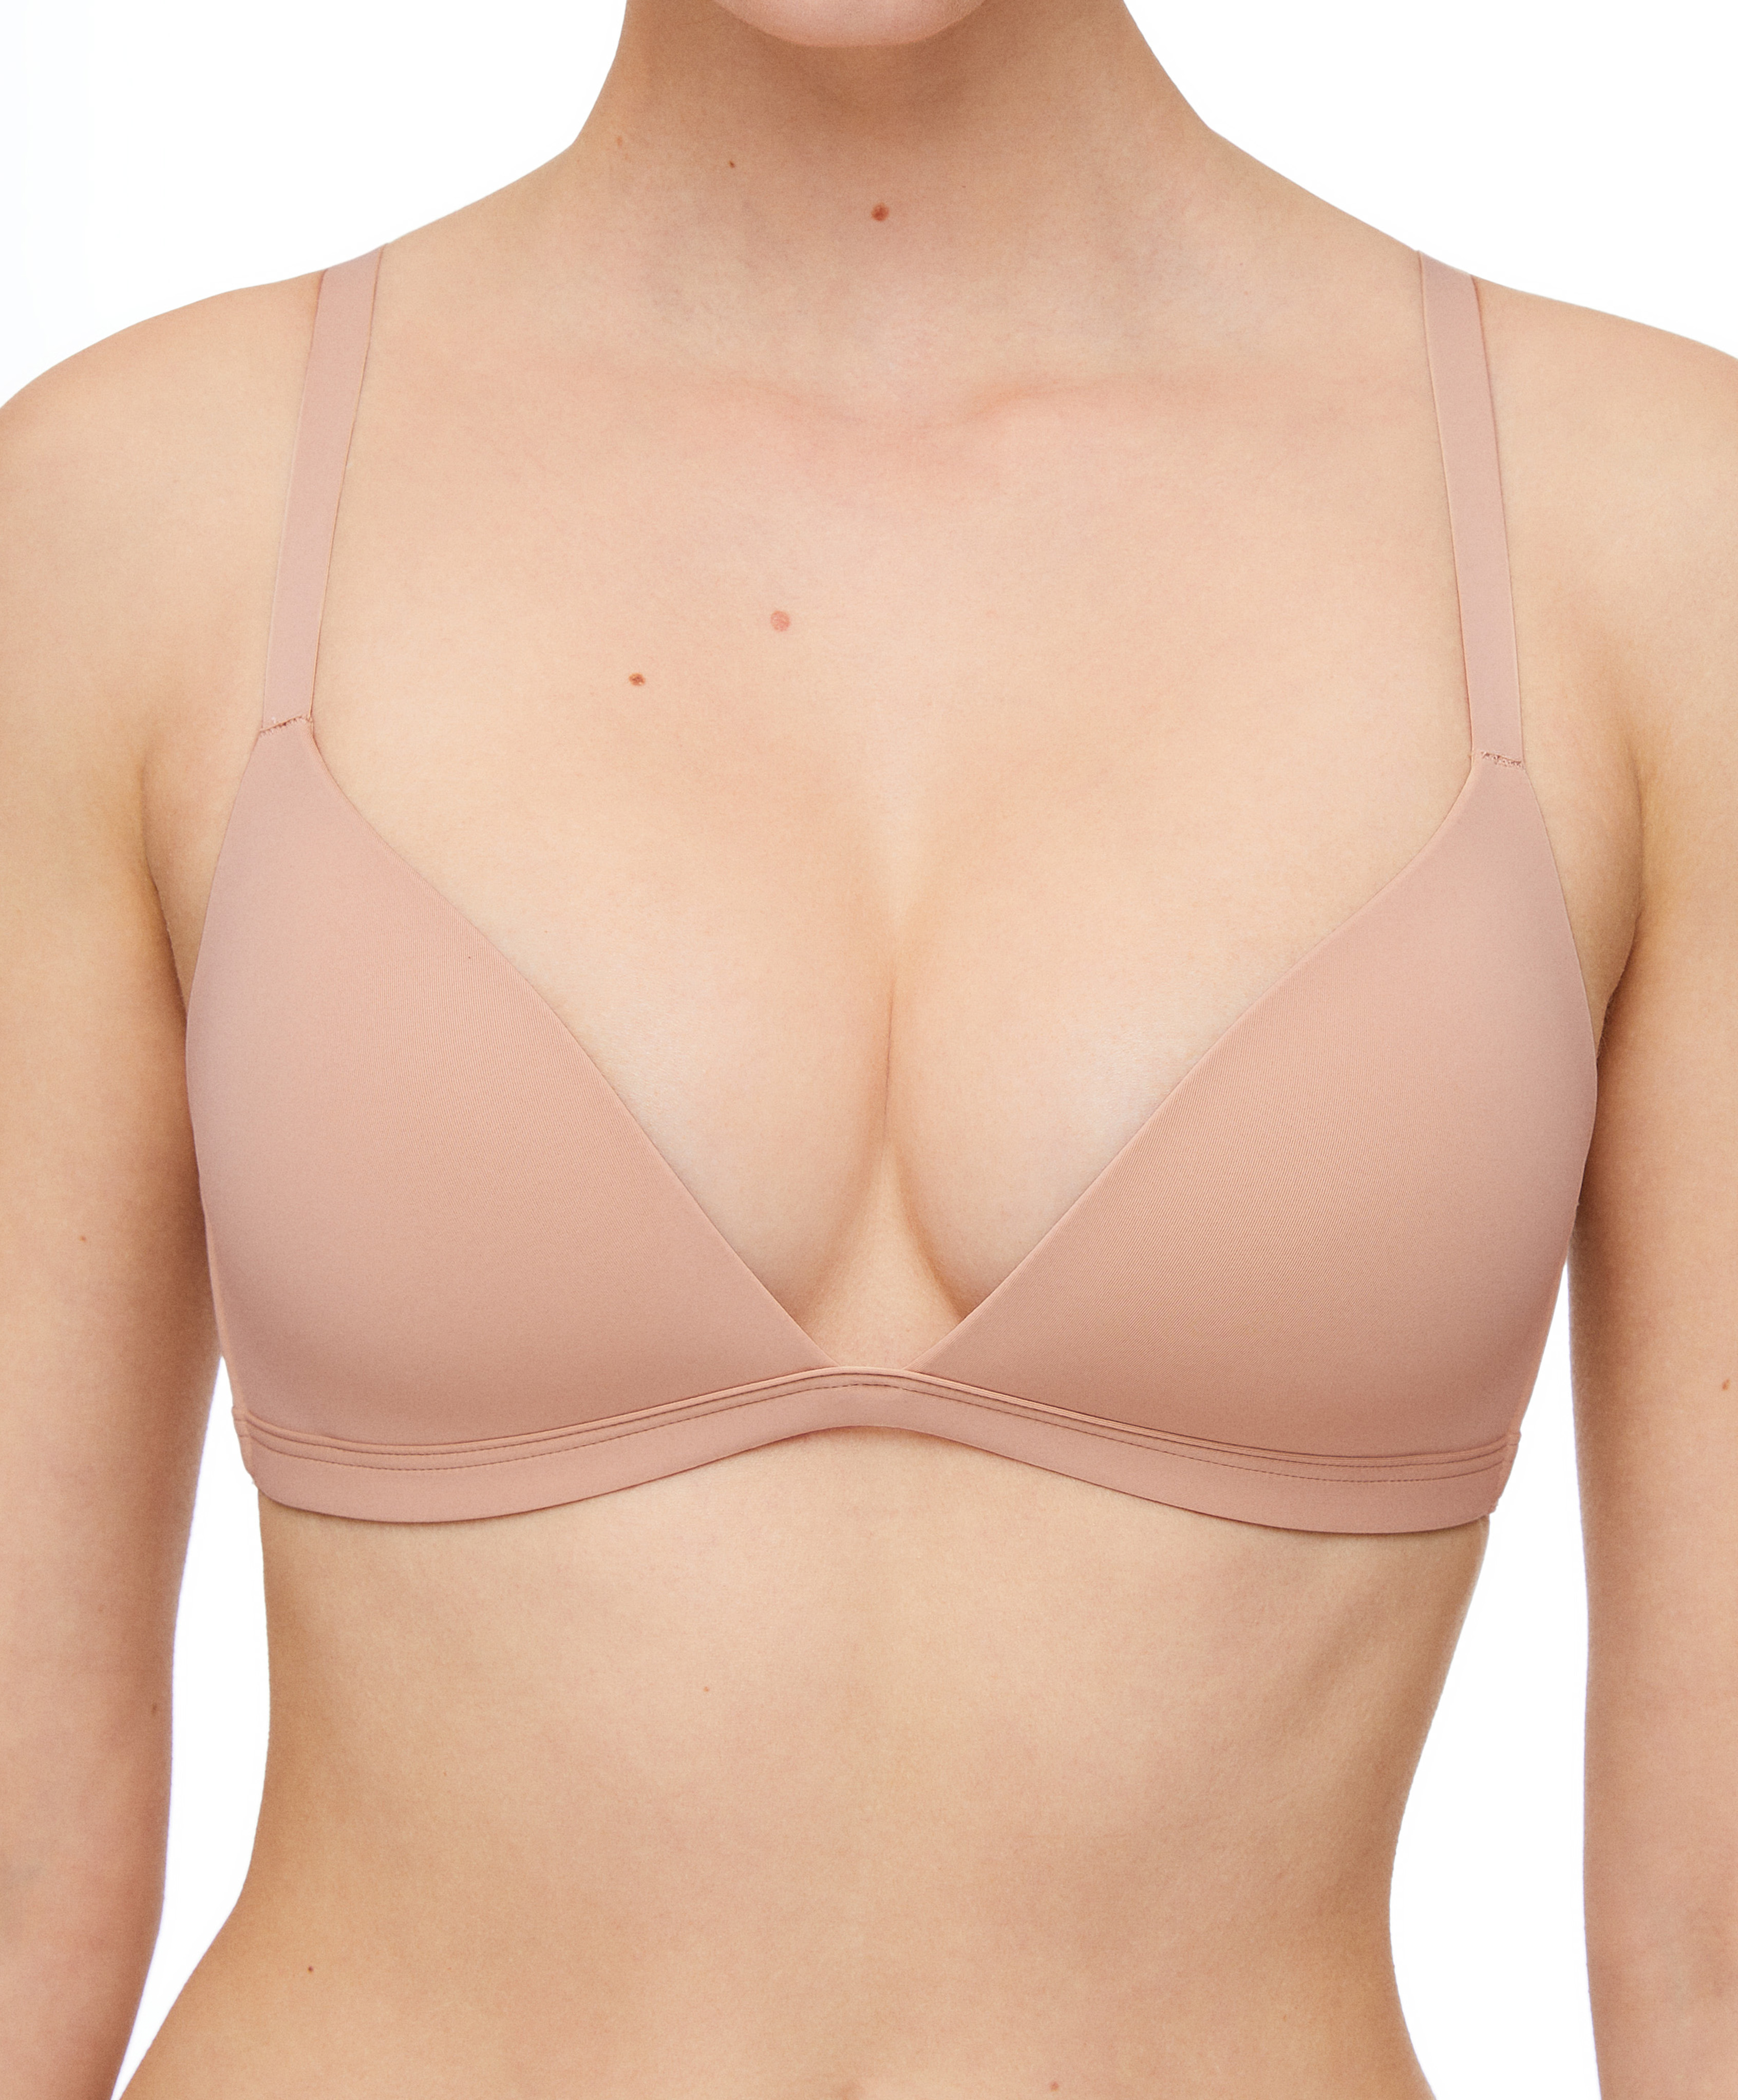 Polyamide blend low-cut triangle bra